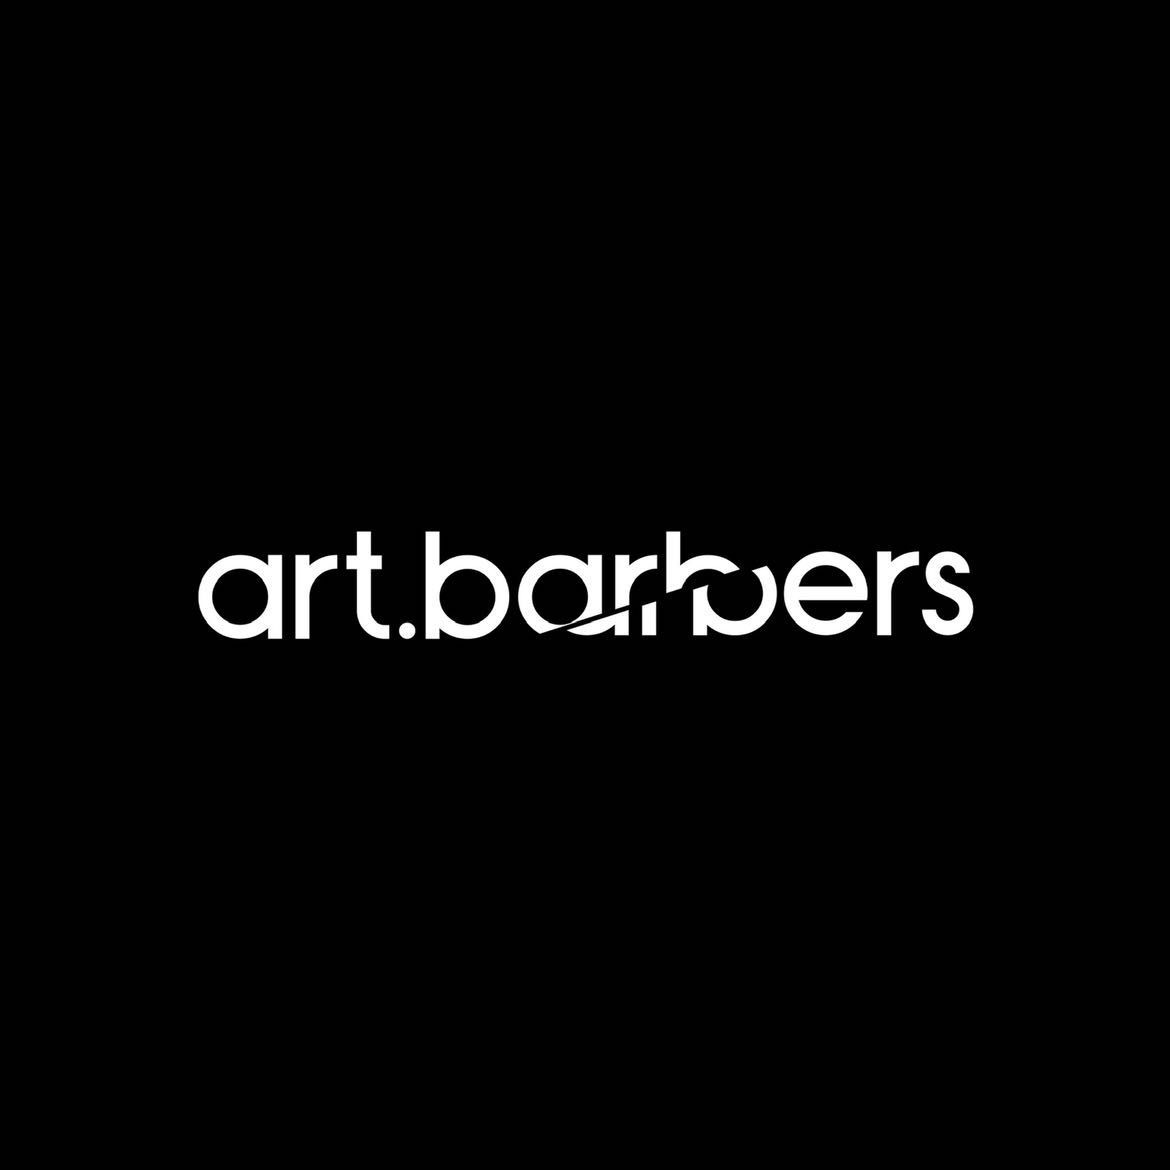 art.barbers, 14-15 Allison St, B5 5TH, Birmingham